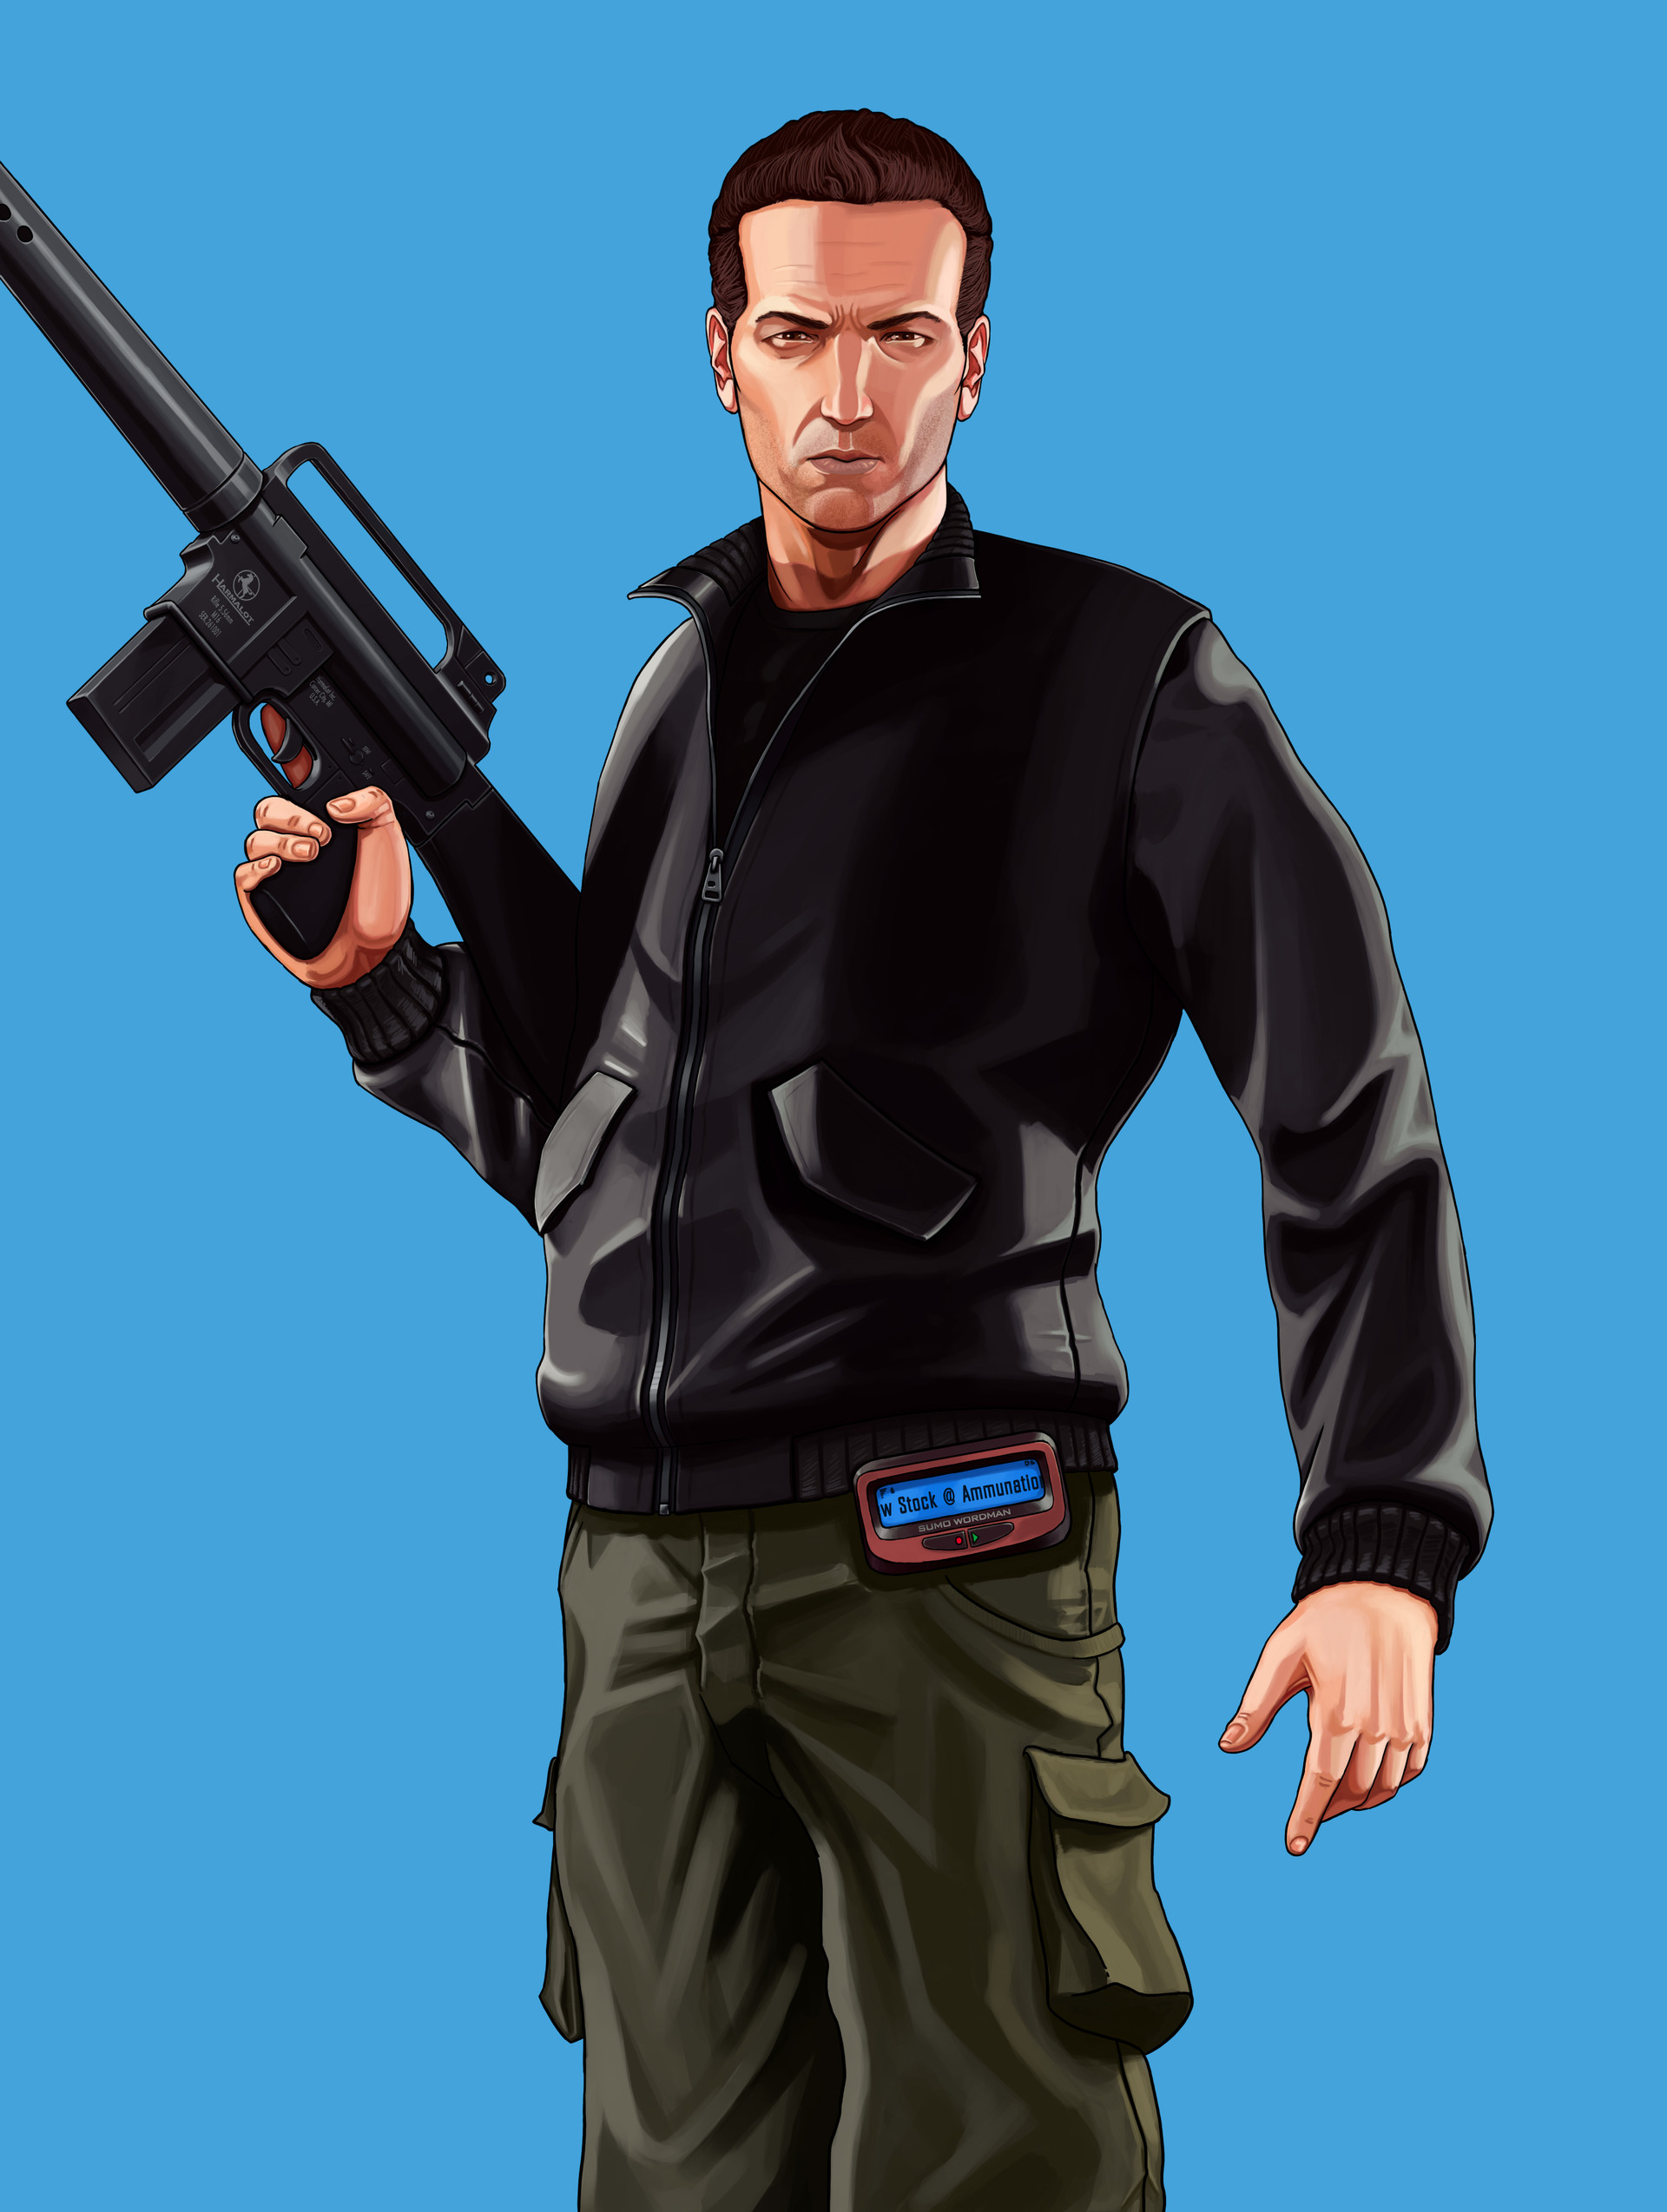 Daniel Scholes - Grand Theft Auto III Era Protagonists - GTA V Style